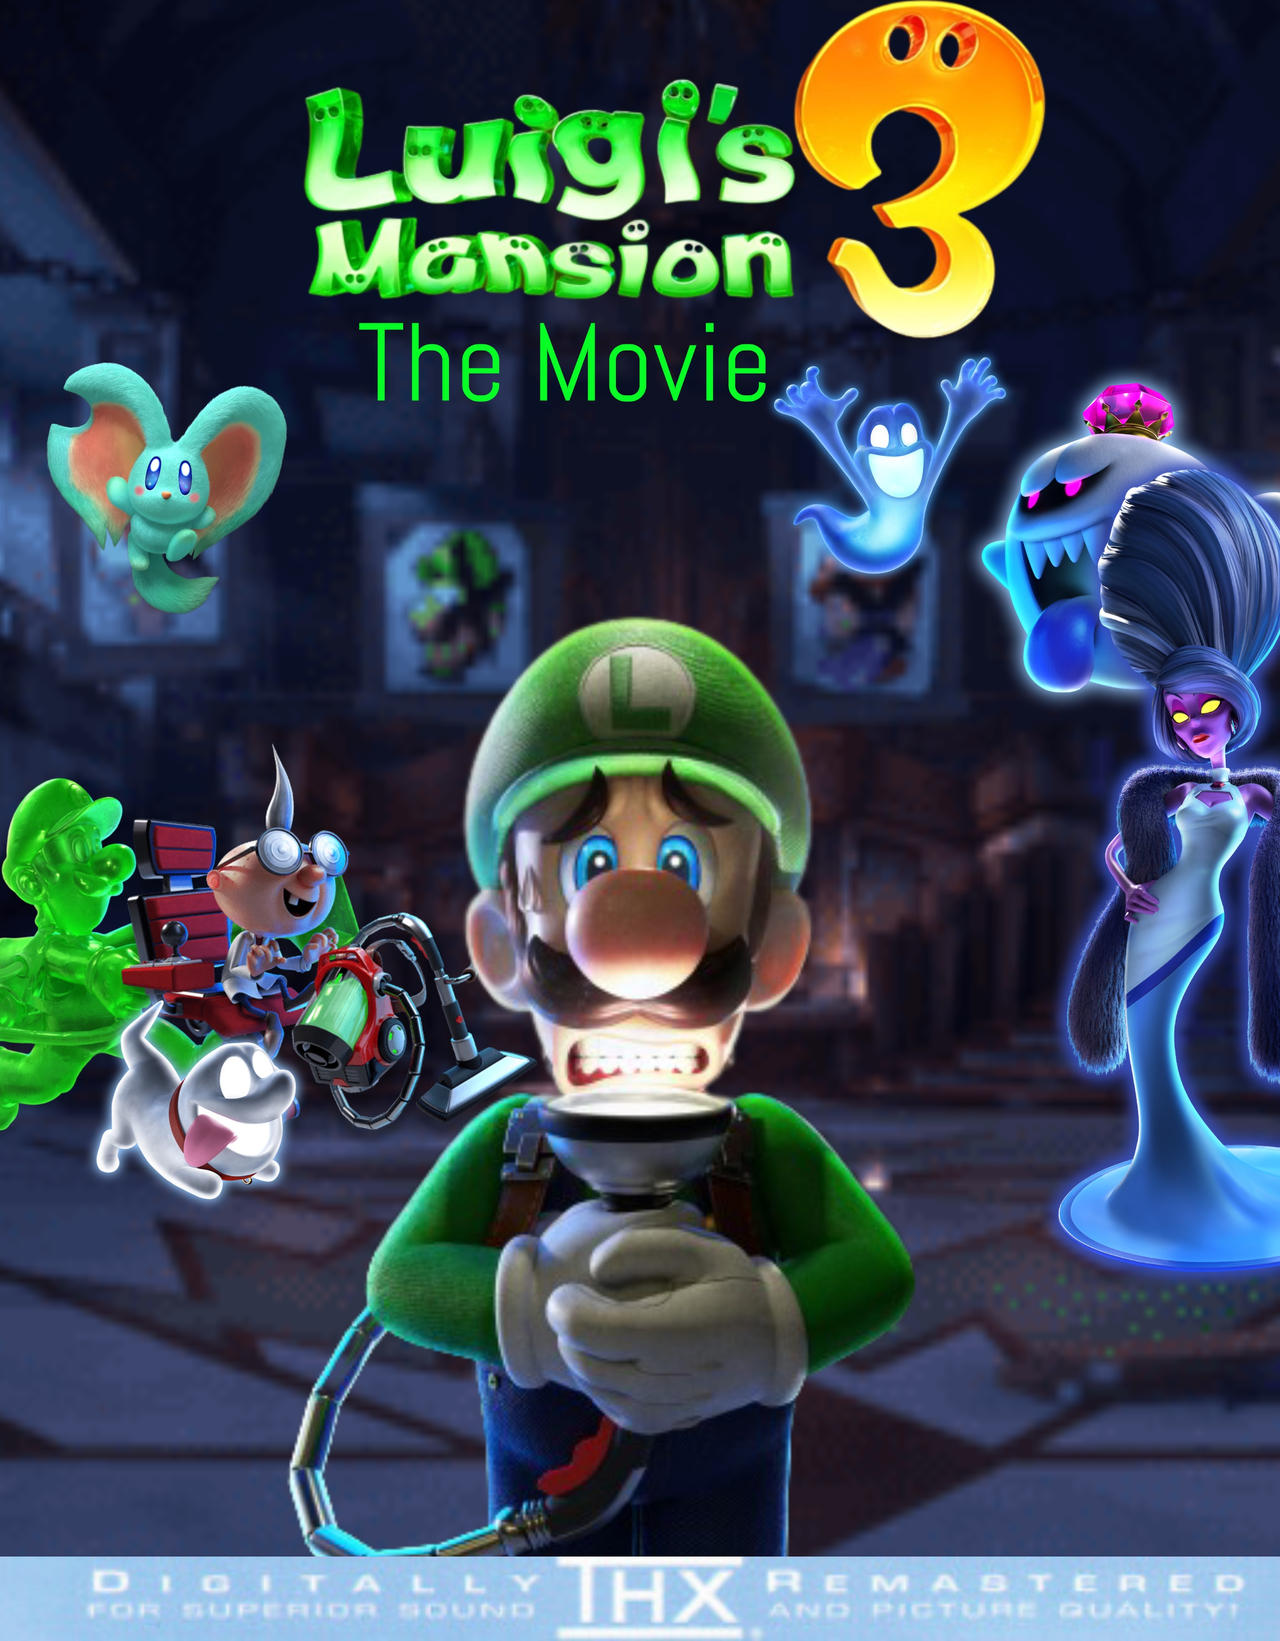 Luigi's Mansion 3 Nintendo Switch Cover by PeterisBeter on DeviantArt